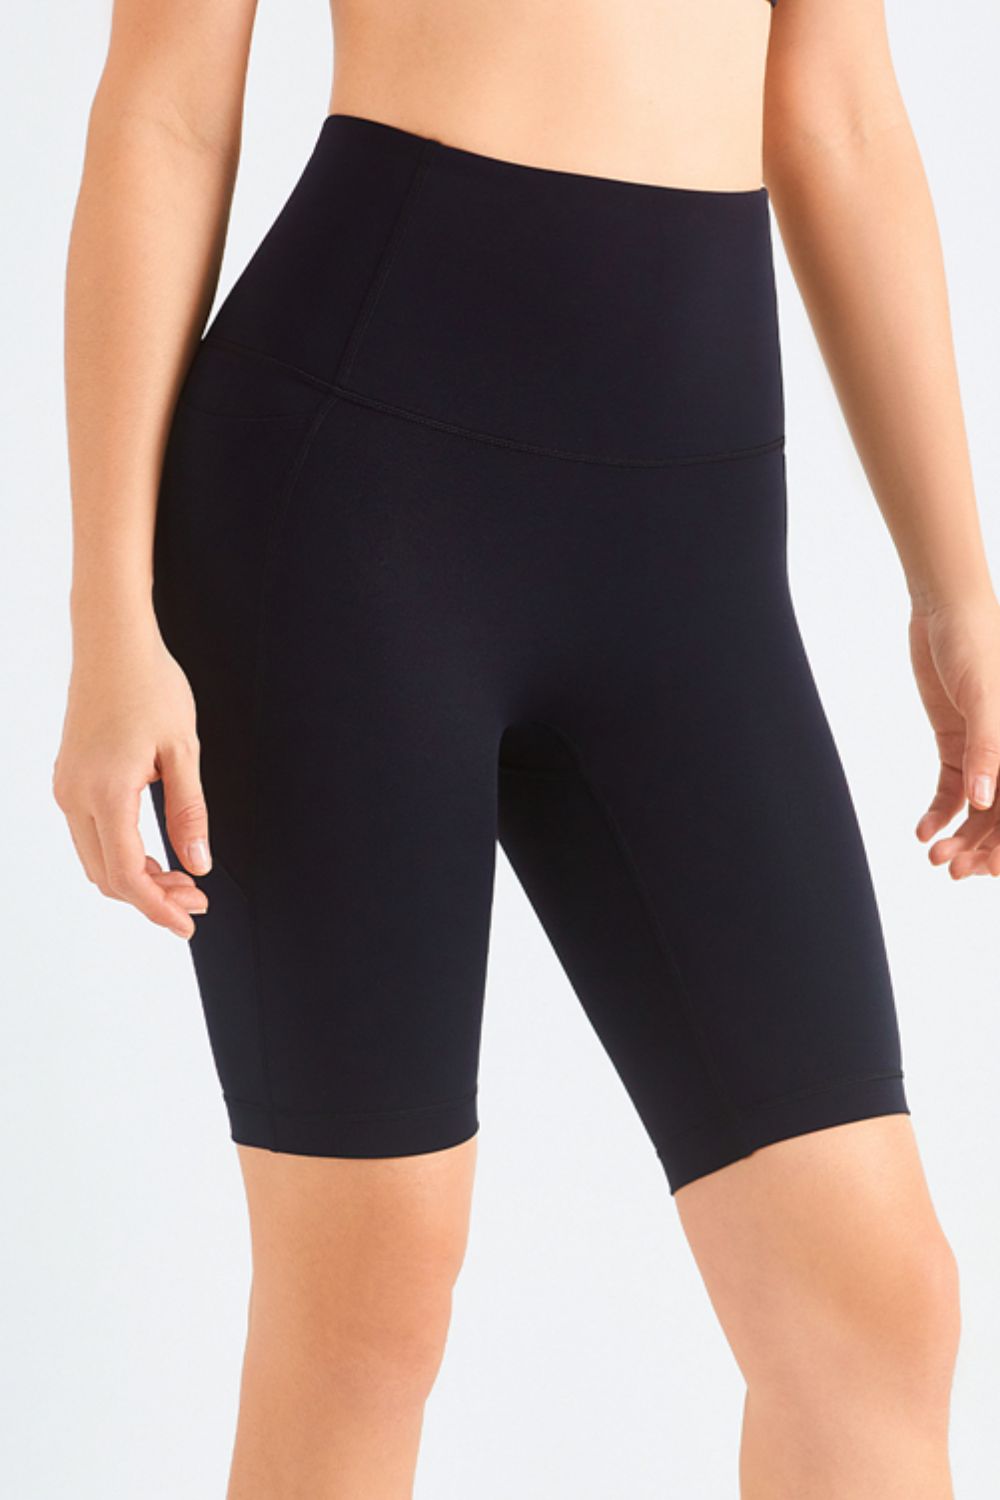 Feel Like Skin Elastic Waistband Pocket Biker Shorts - DromedarShop.com Online Boutique